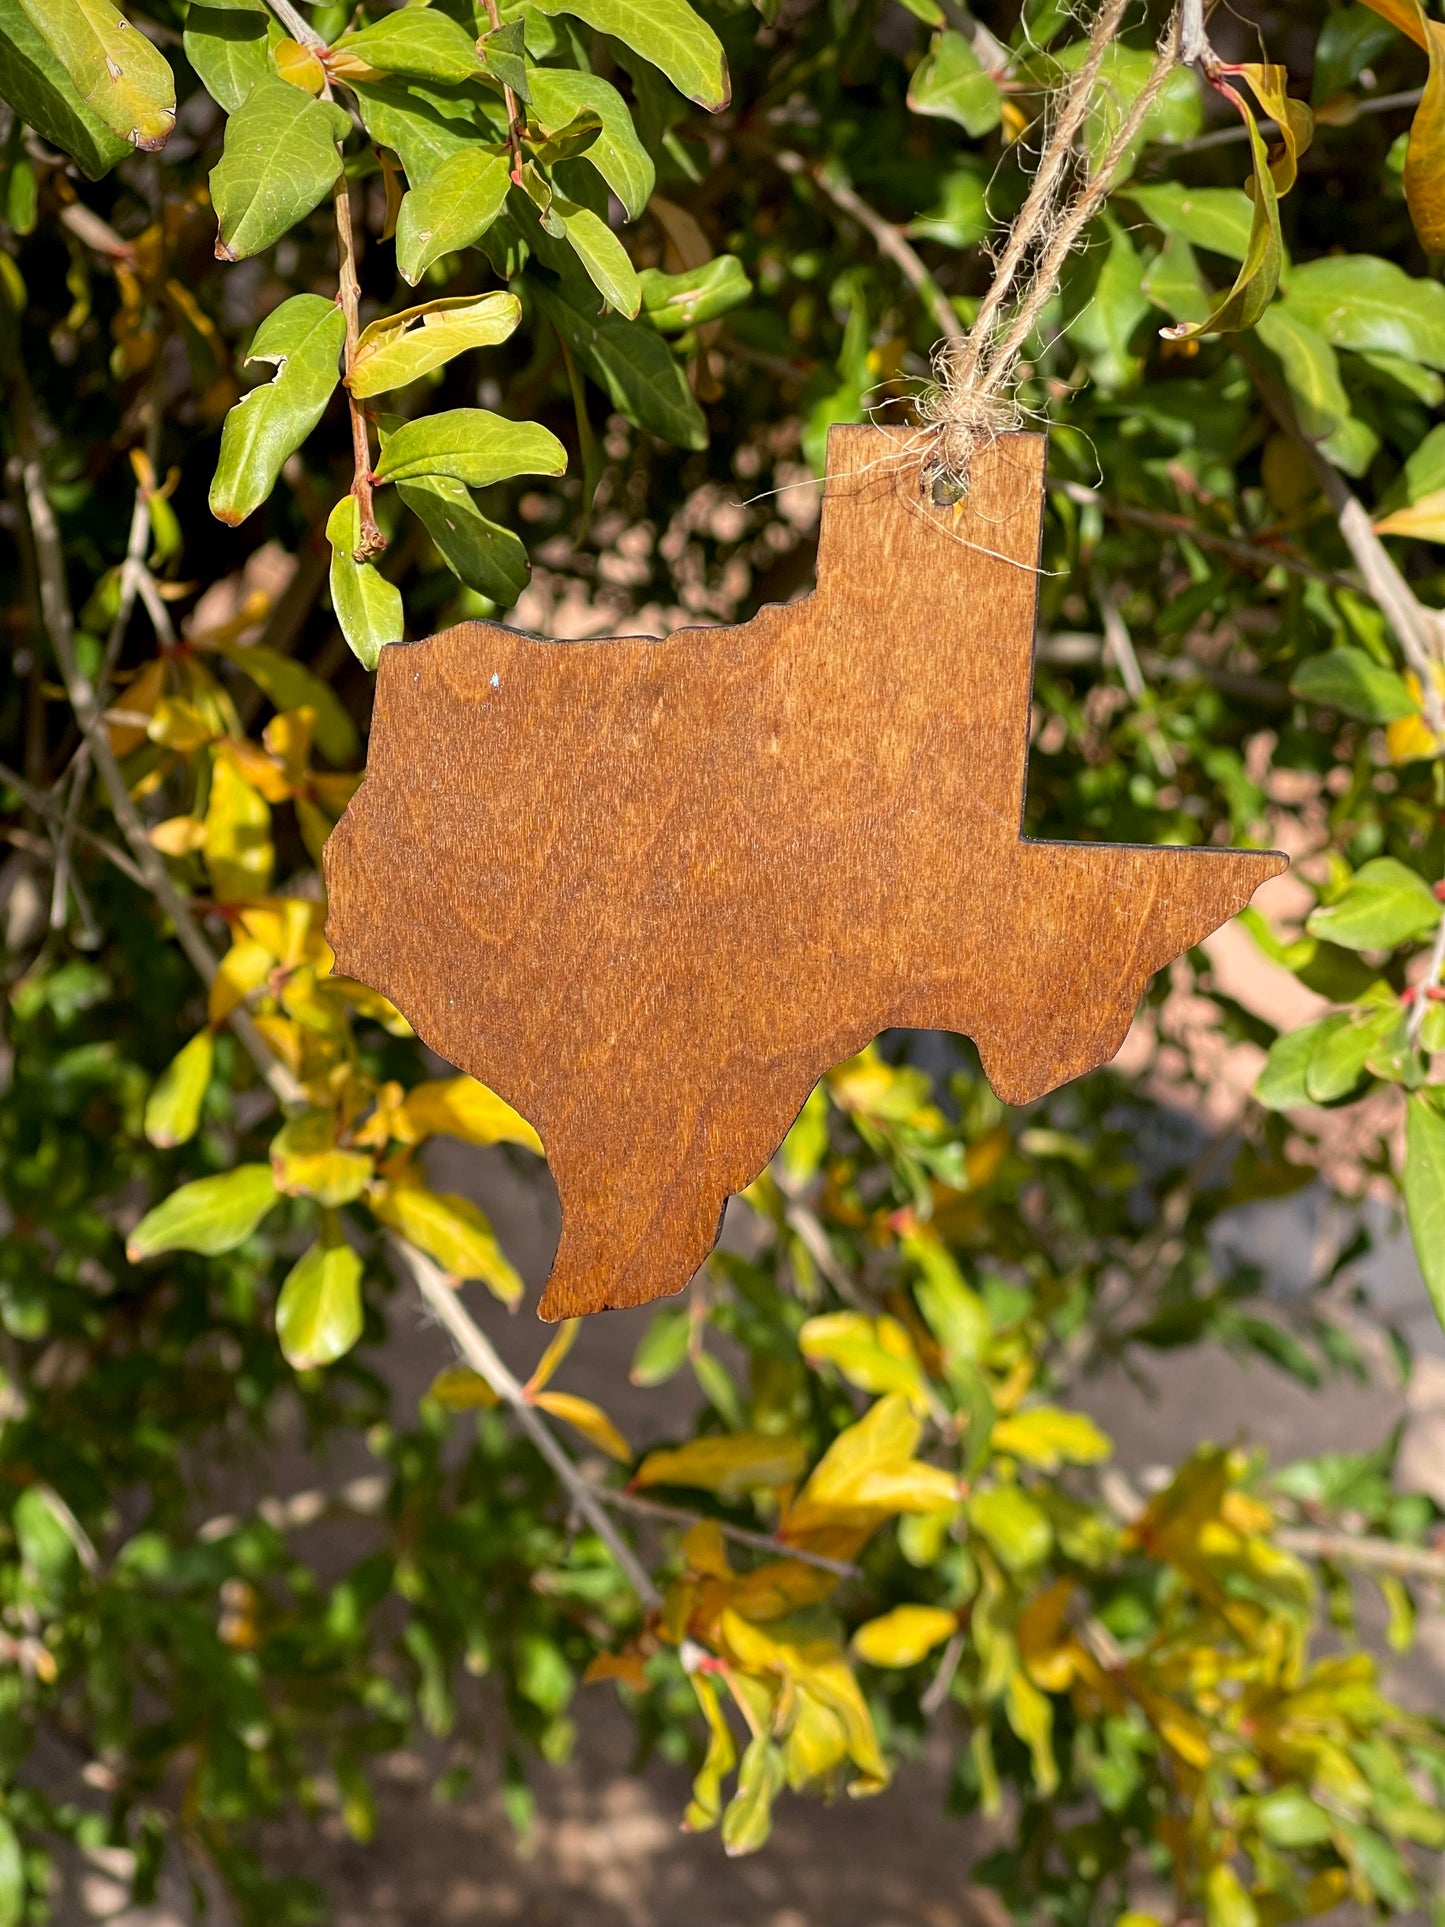 Heritage Texas Ornament